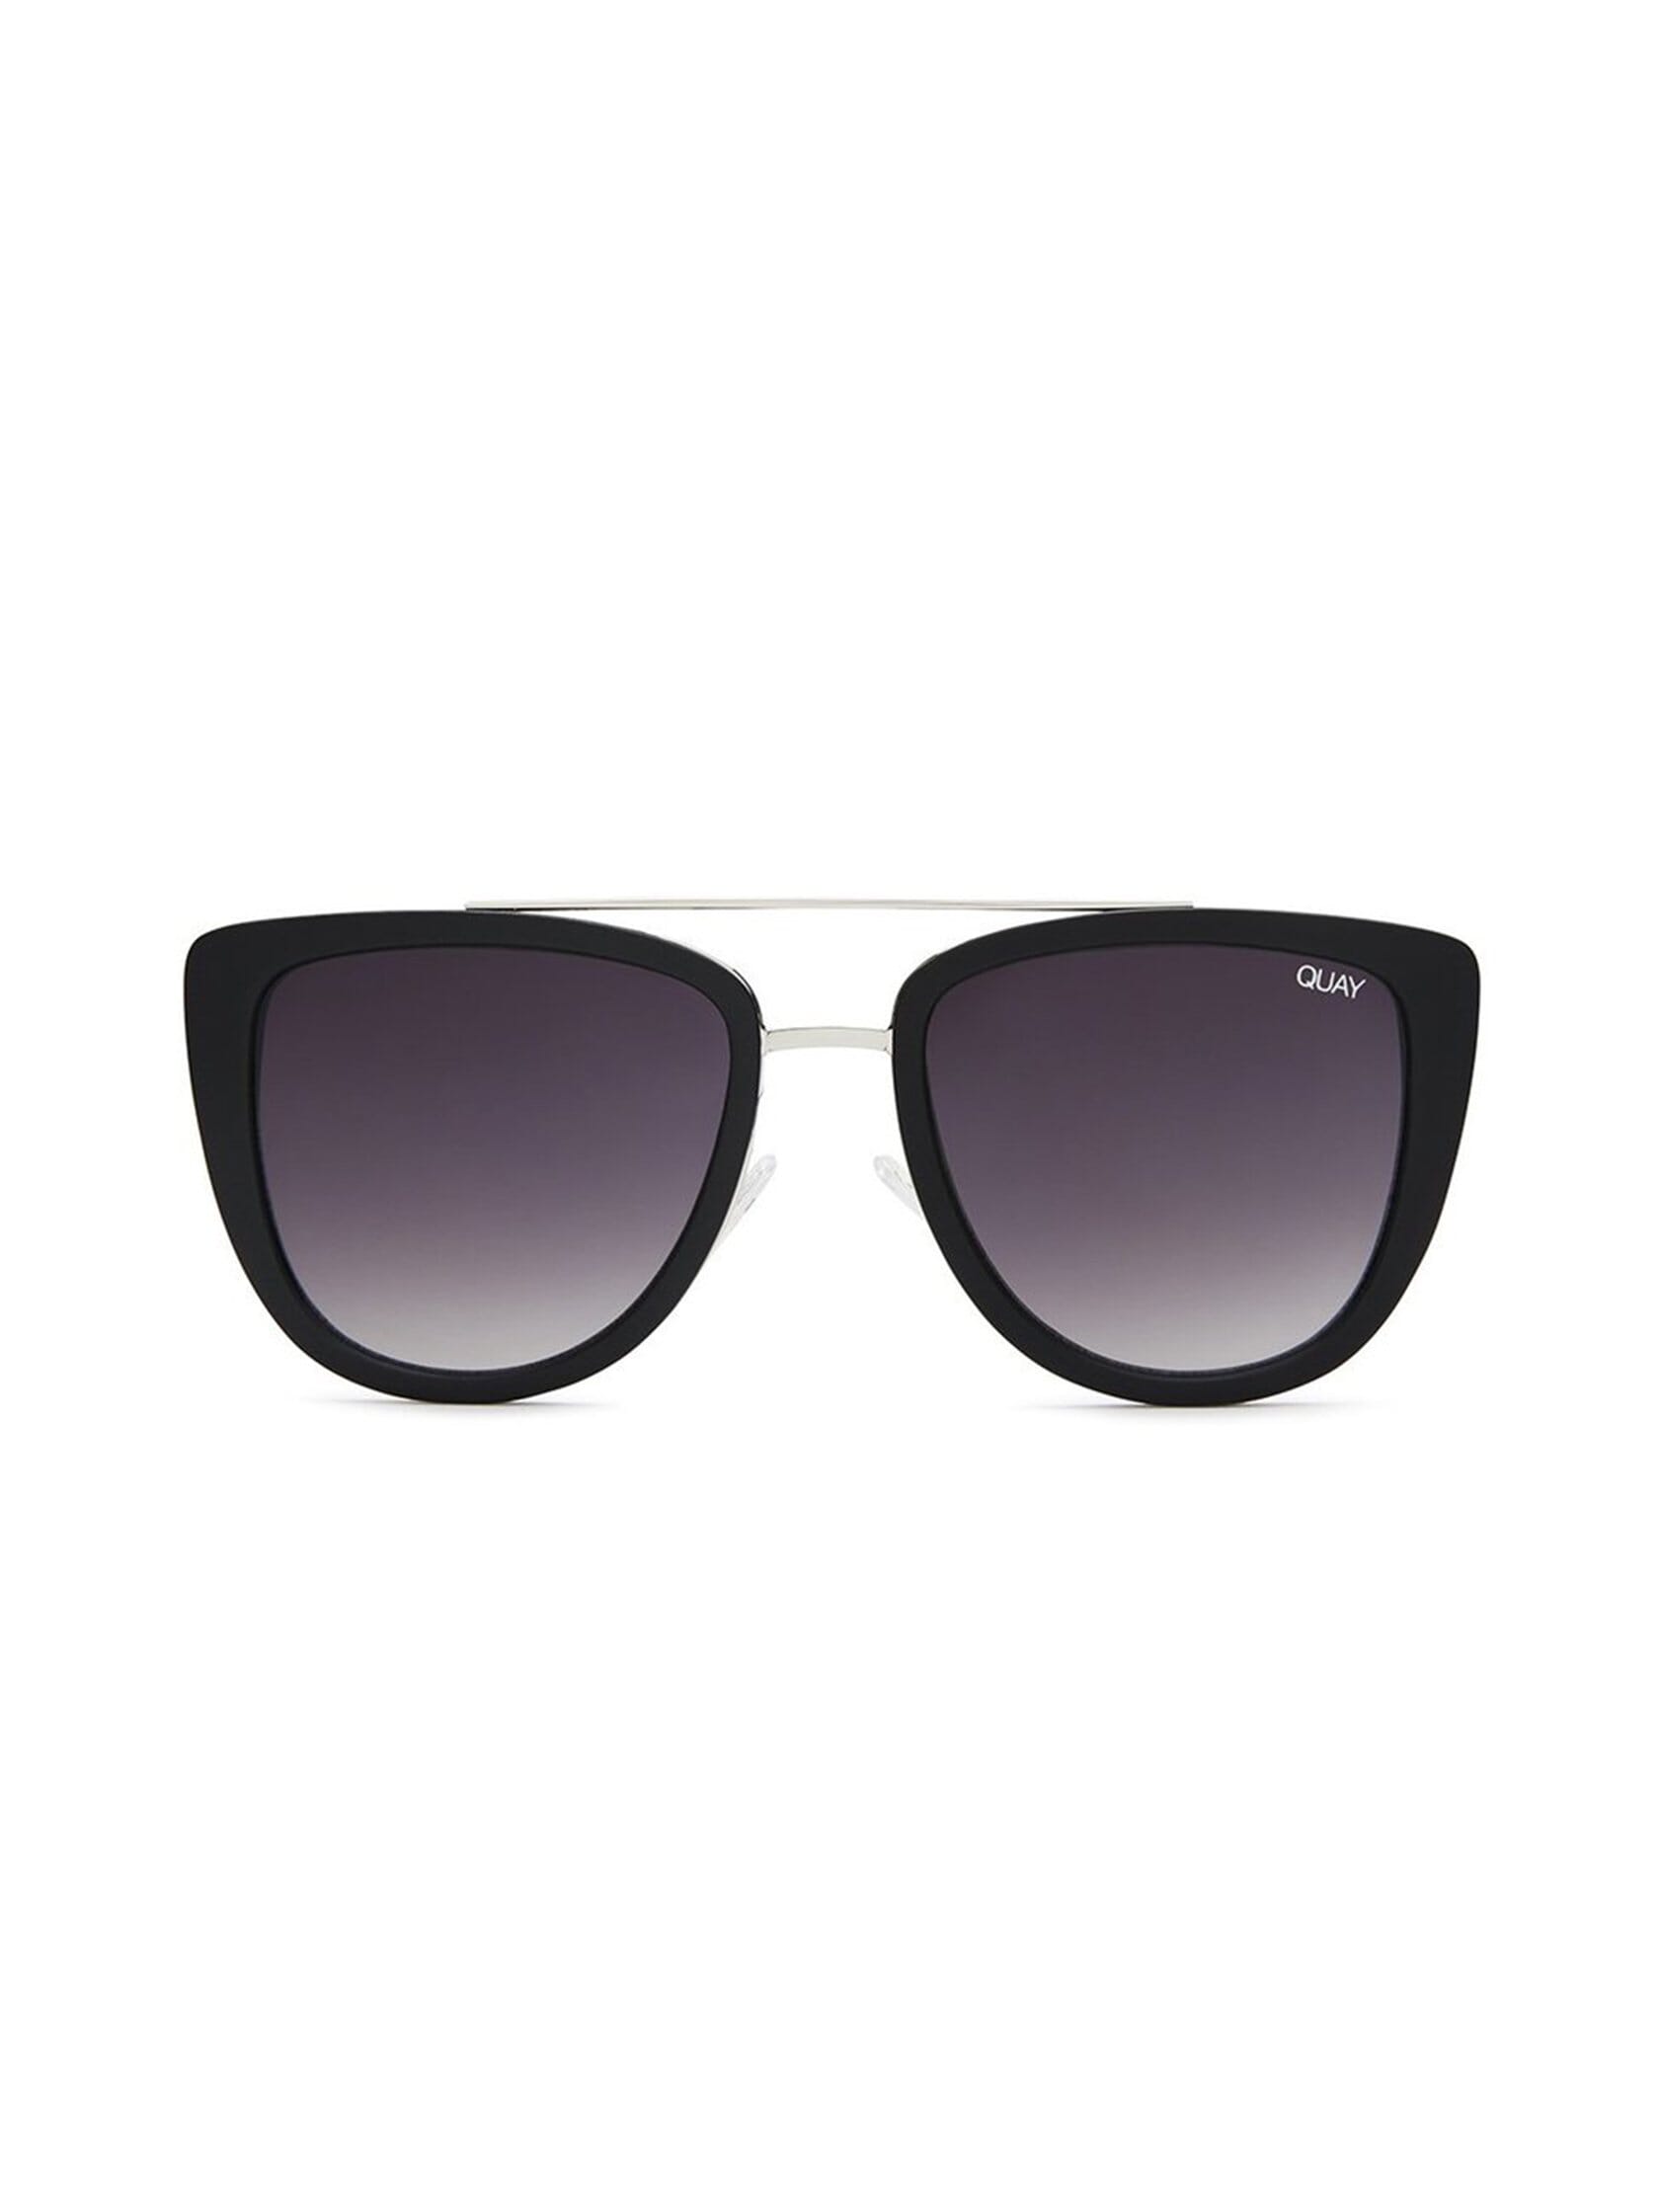 Quay Australia French Kiss 55mm Cat Eye Sunglasses in Black/Smoke Lens